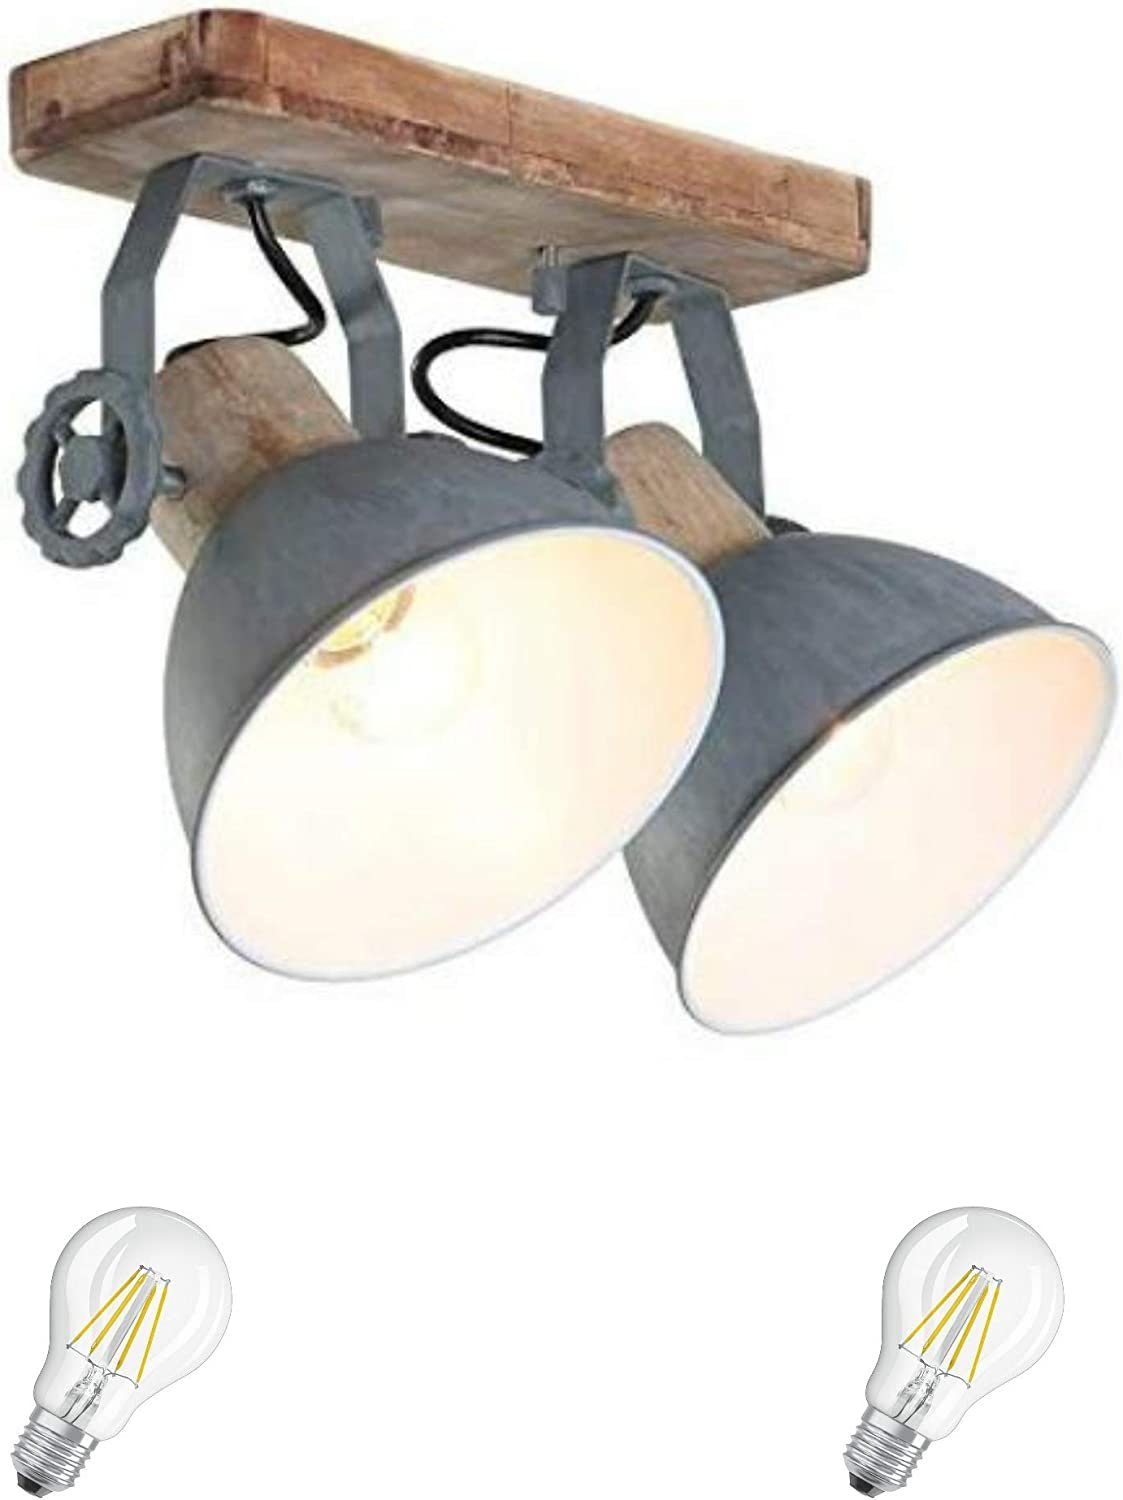 Lichthandel Hoch LED Deckenleuchte moderne Deckenlampe Industrie Vintage Retro Holz Metall incl. 7W LED, LED wechselbar, Warmweiß 7969Grau